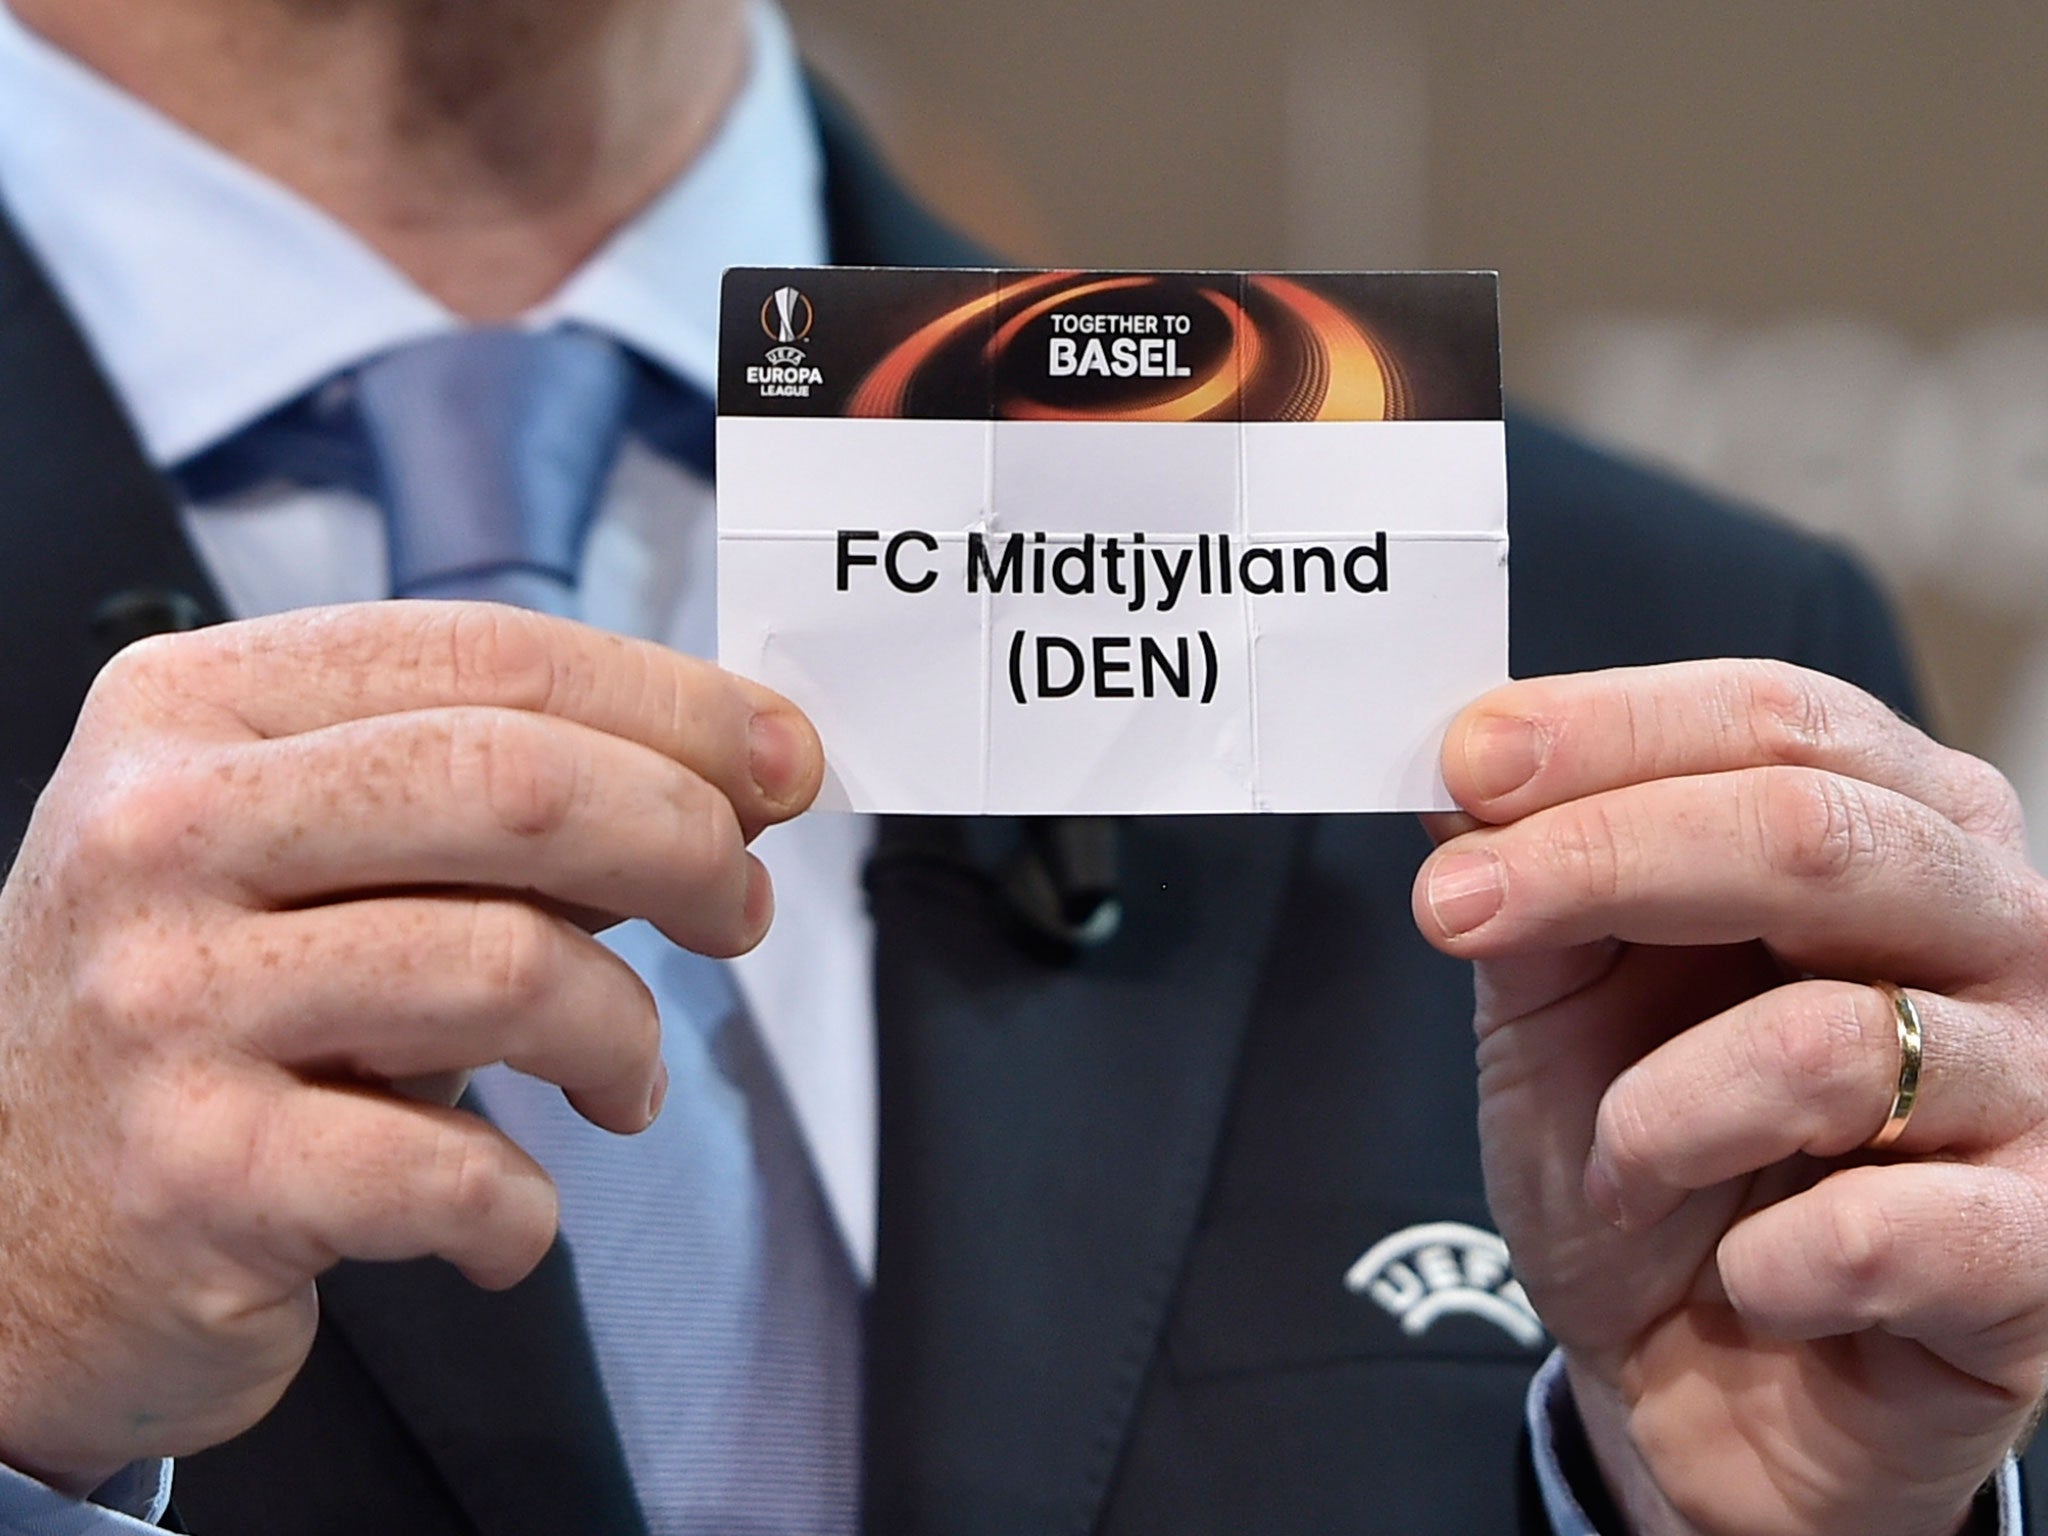 Midtjylland were drawn against Manchester United